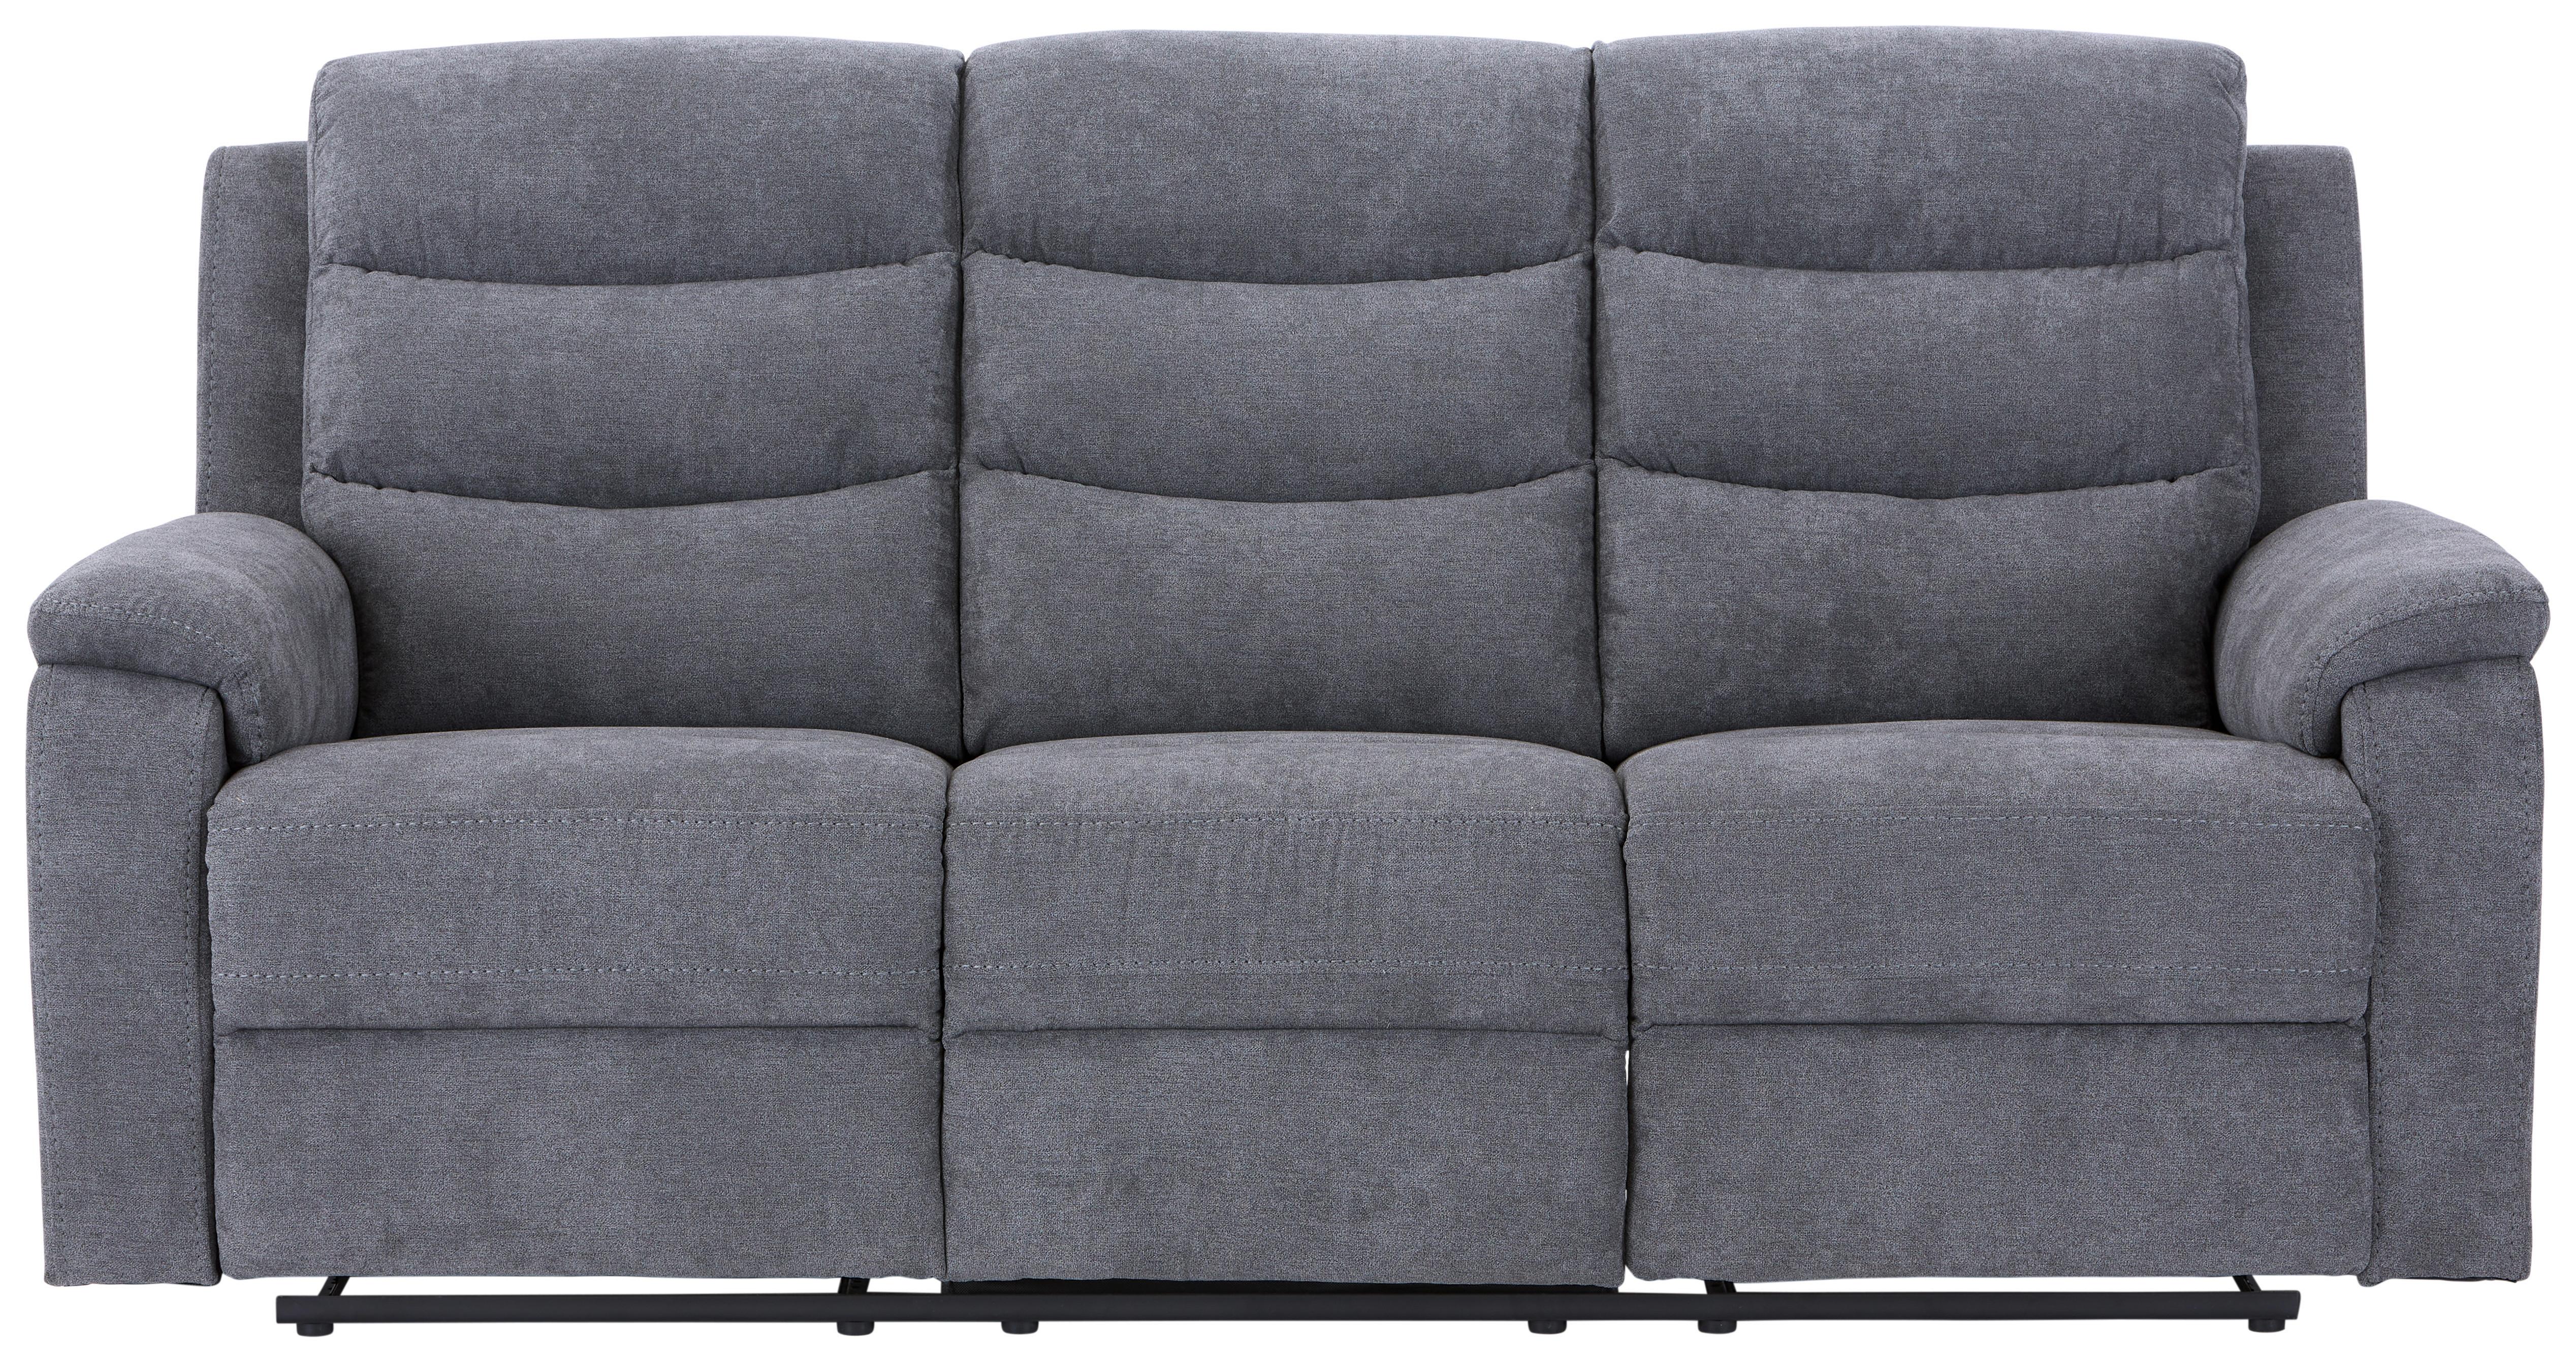 3-Sitzer-Sofa + Relaxfunktion Manchester Grau - Schwarz/Grau, KONVENTIONELL, Holz/Textil (208/102/93cm) - Ondega